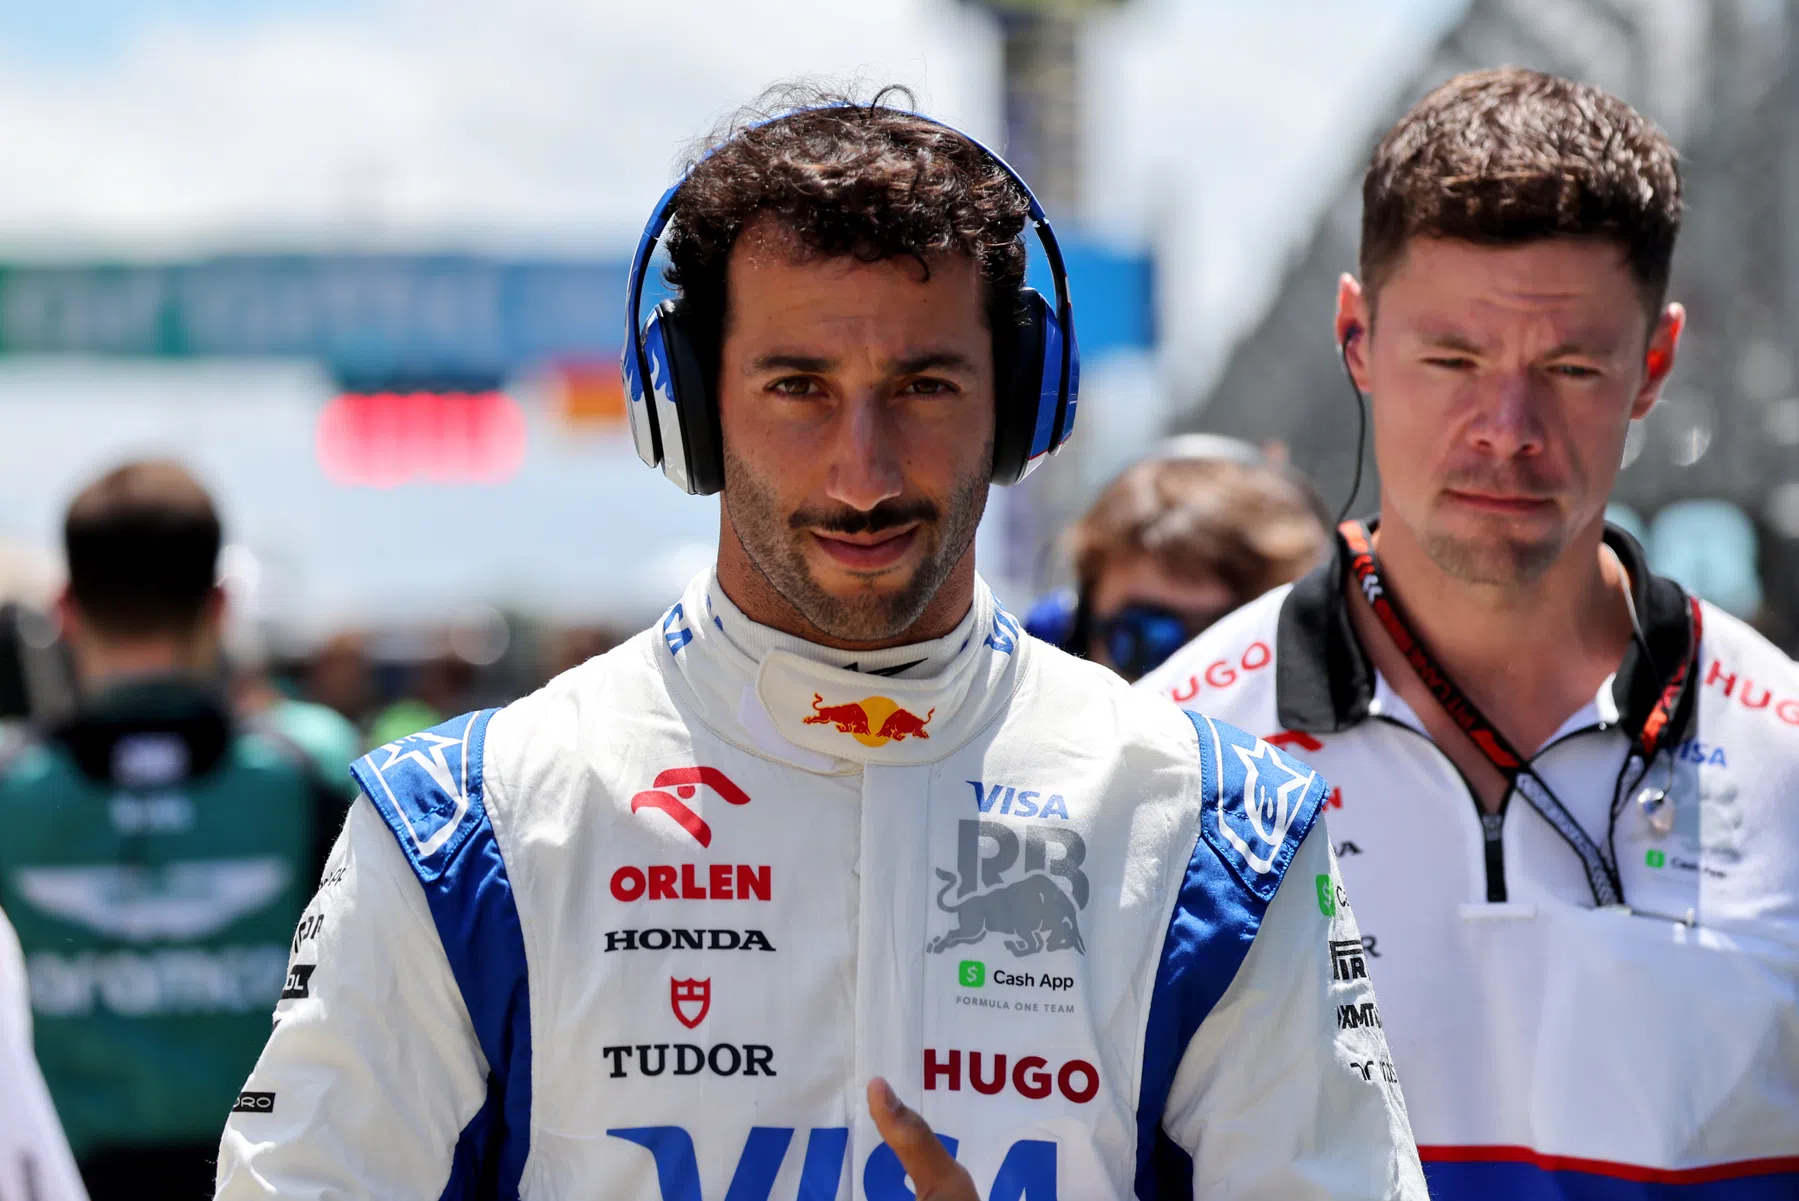 Zukunft von Daniel Ricciardo bei vcarb unklar